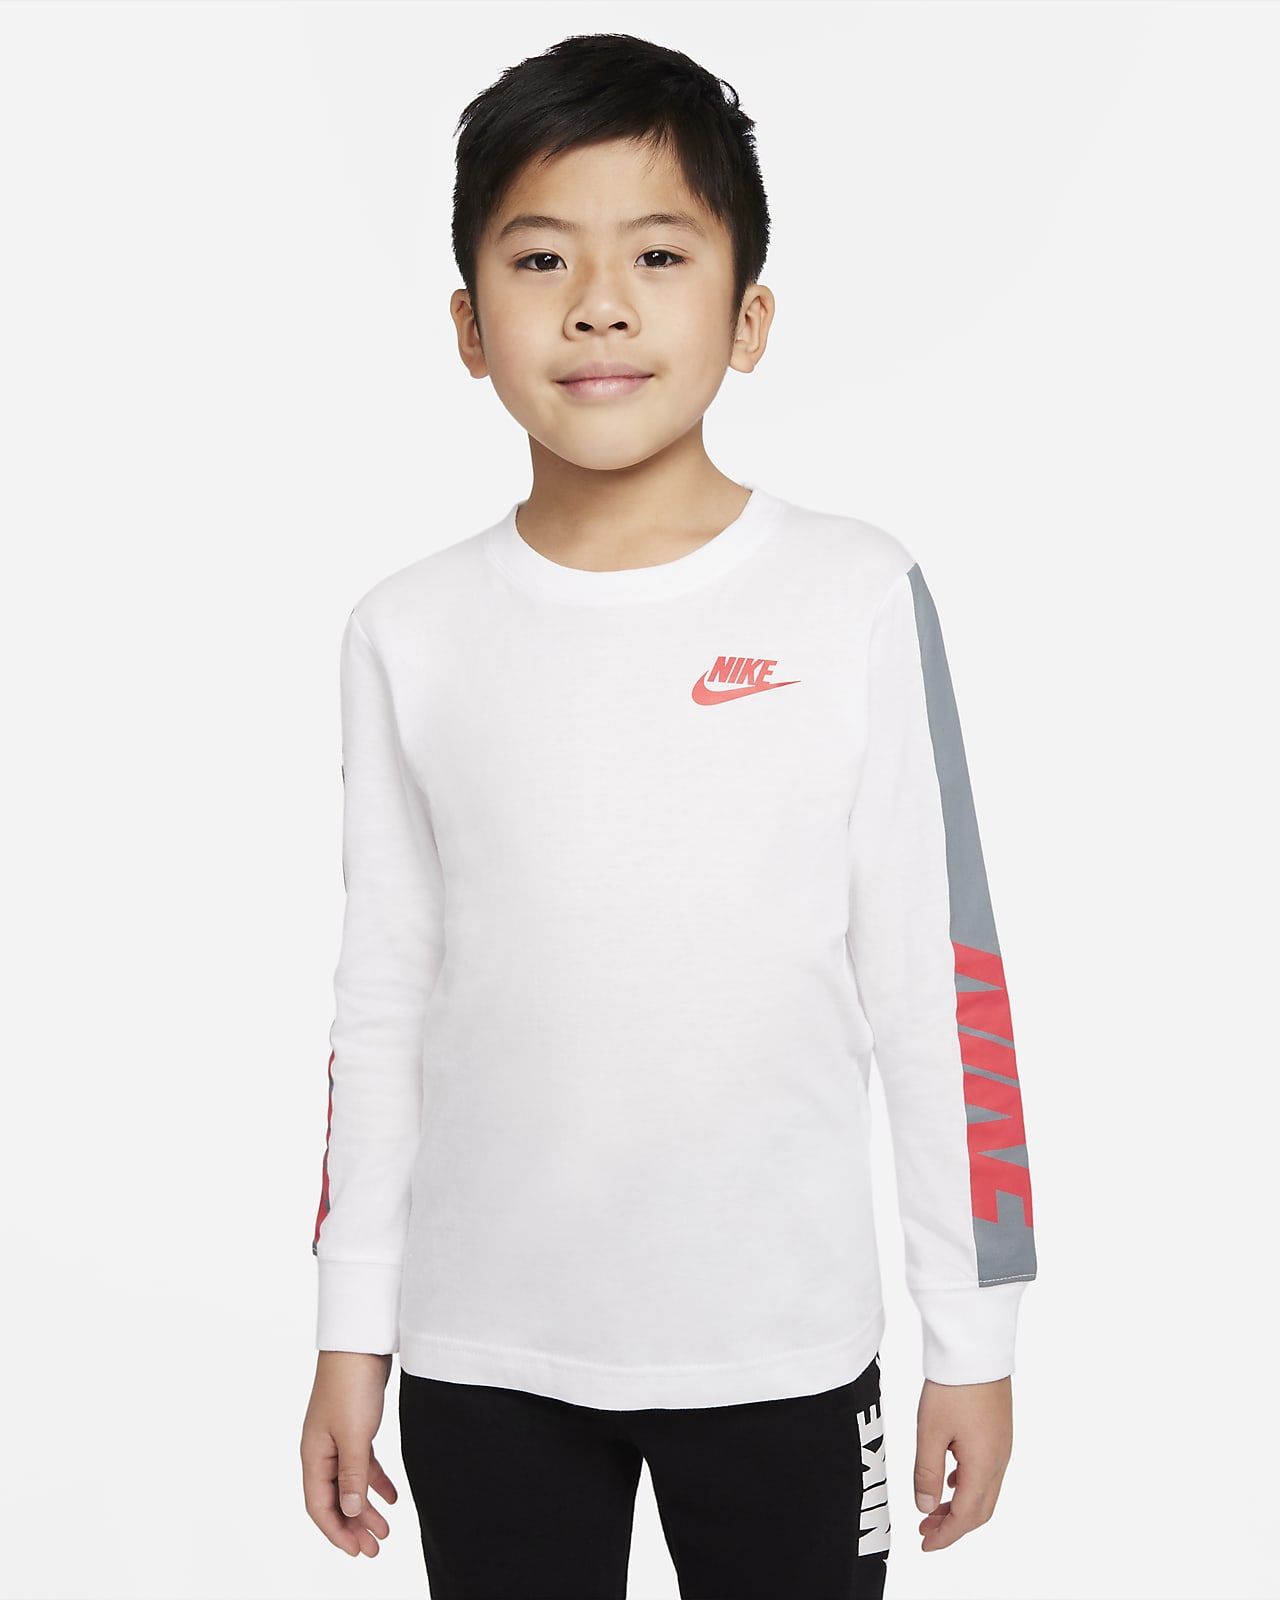 Little Kids' Long-Sleeve Shirt | Nike (US)